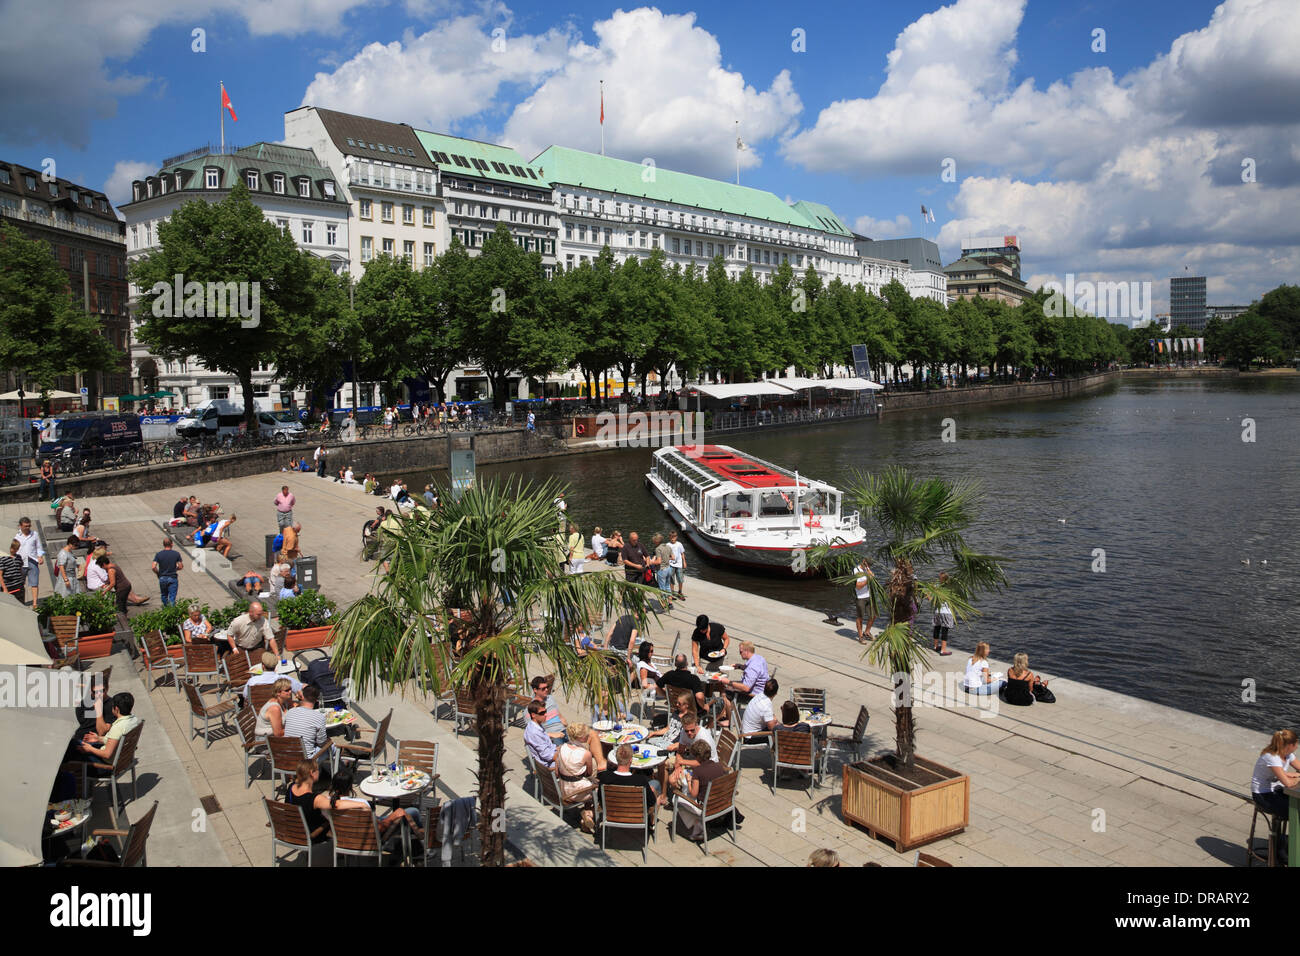 Cafe Alster Pavillion at Waterfront promenade and pier Jungfernstieg, Binnenalster, Lake Alster, Hamburg, Germany, Europe Stock Photo